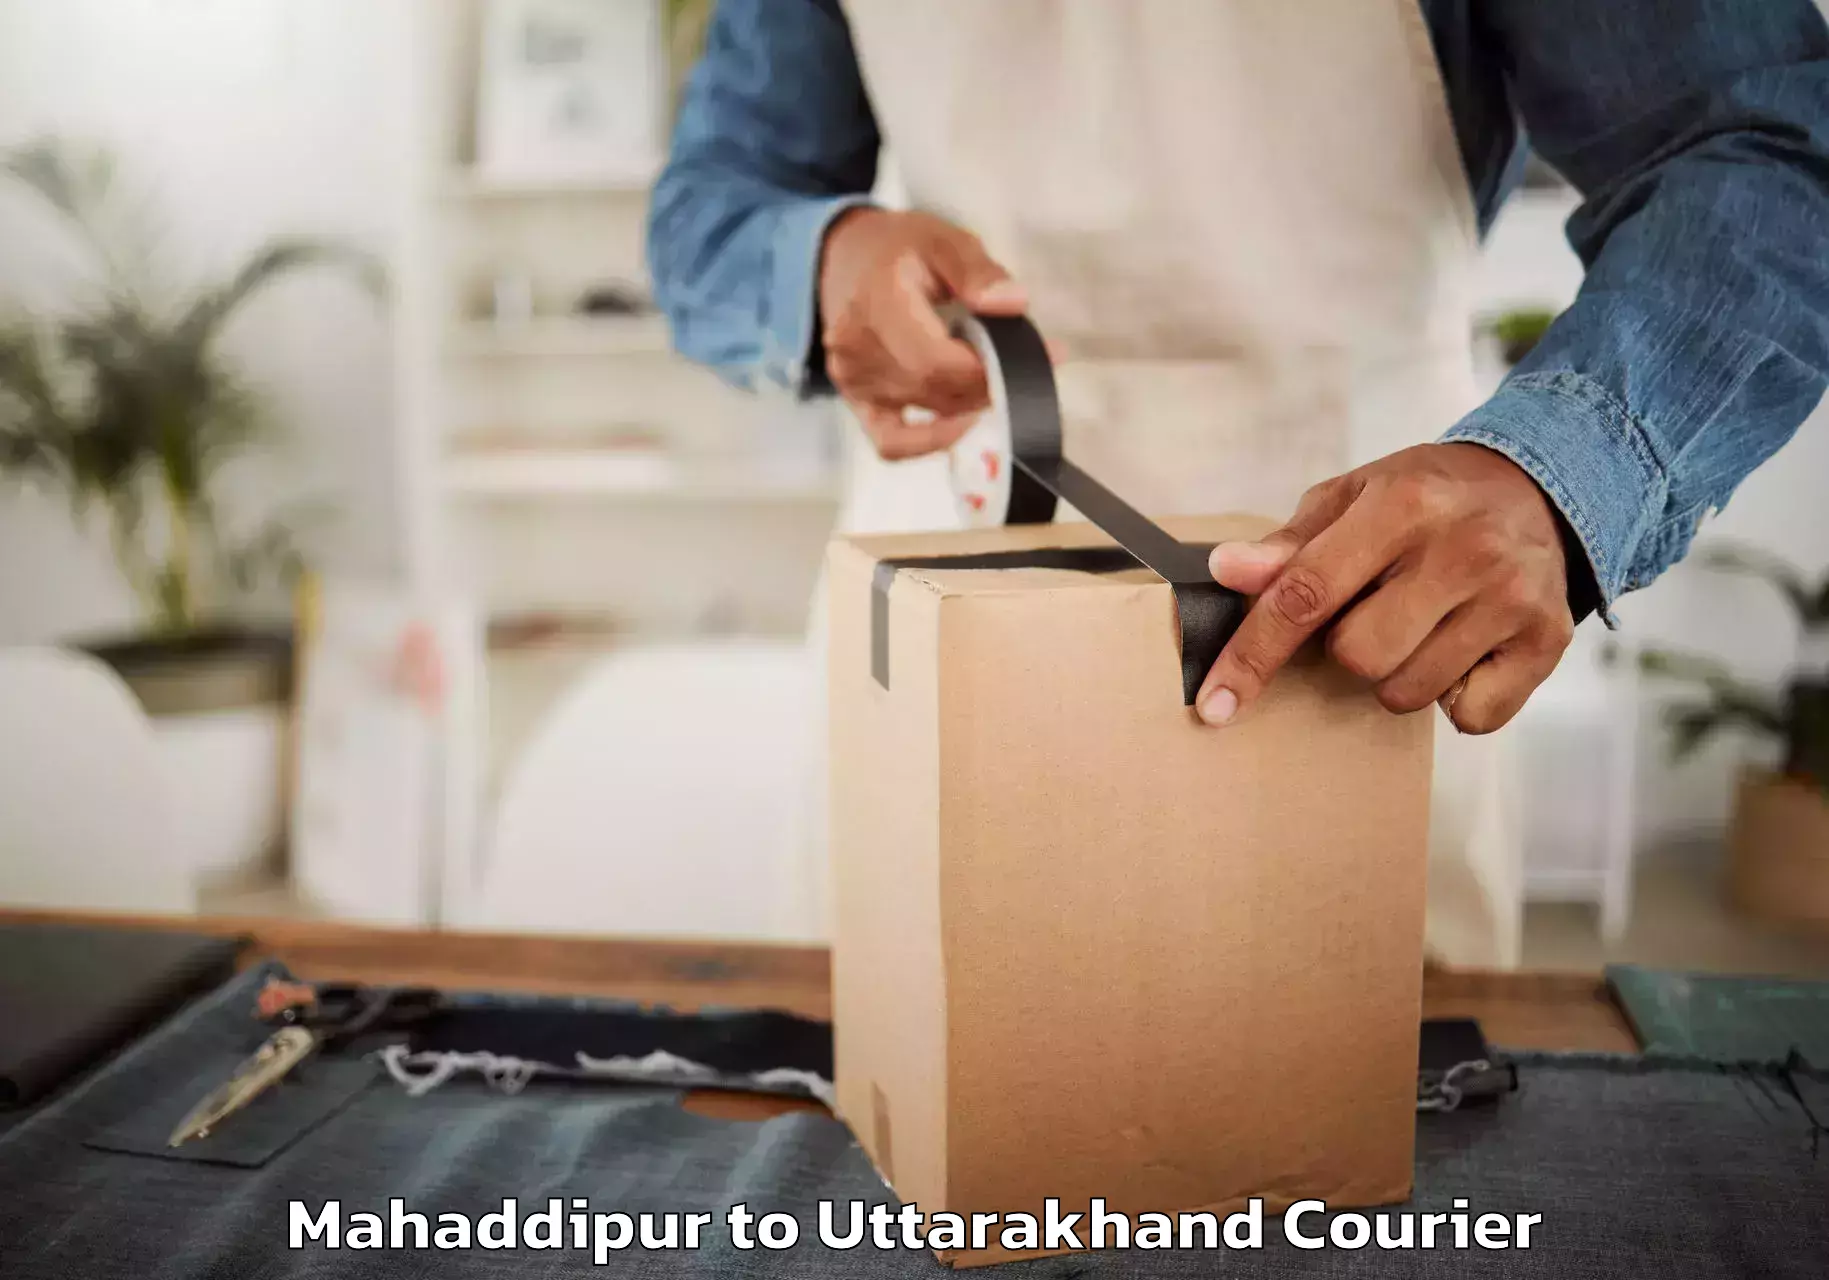 Home goods moving company in Mahaddipur to Gopeshwar